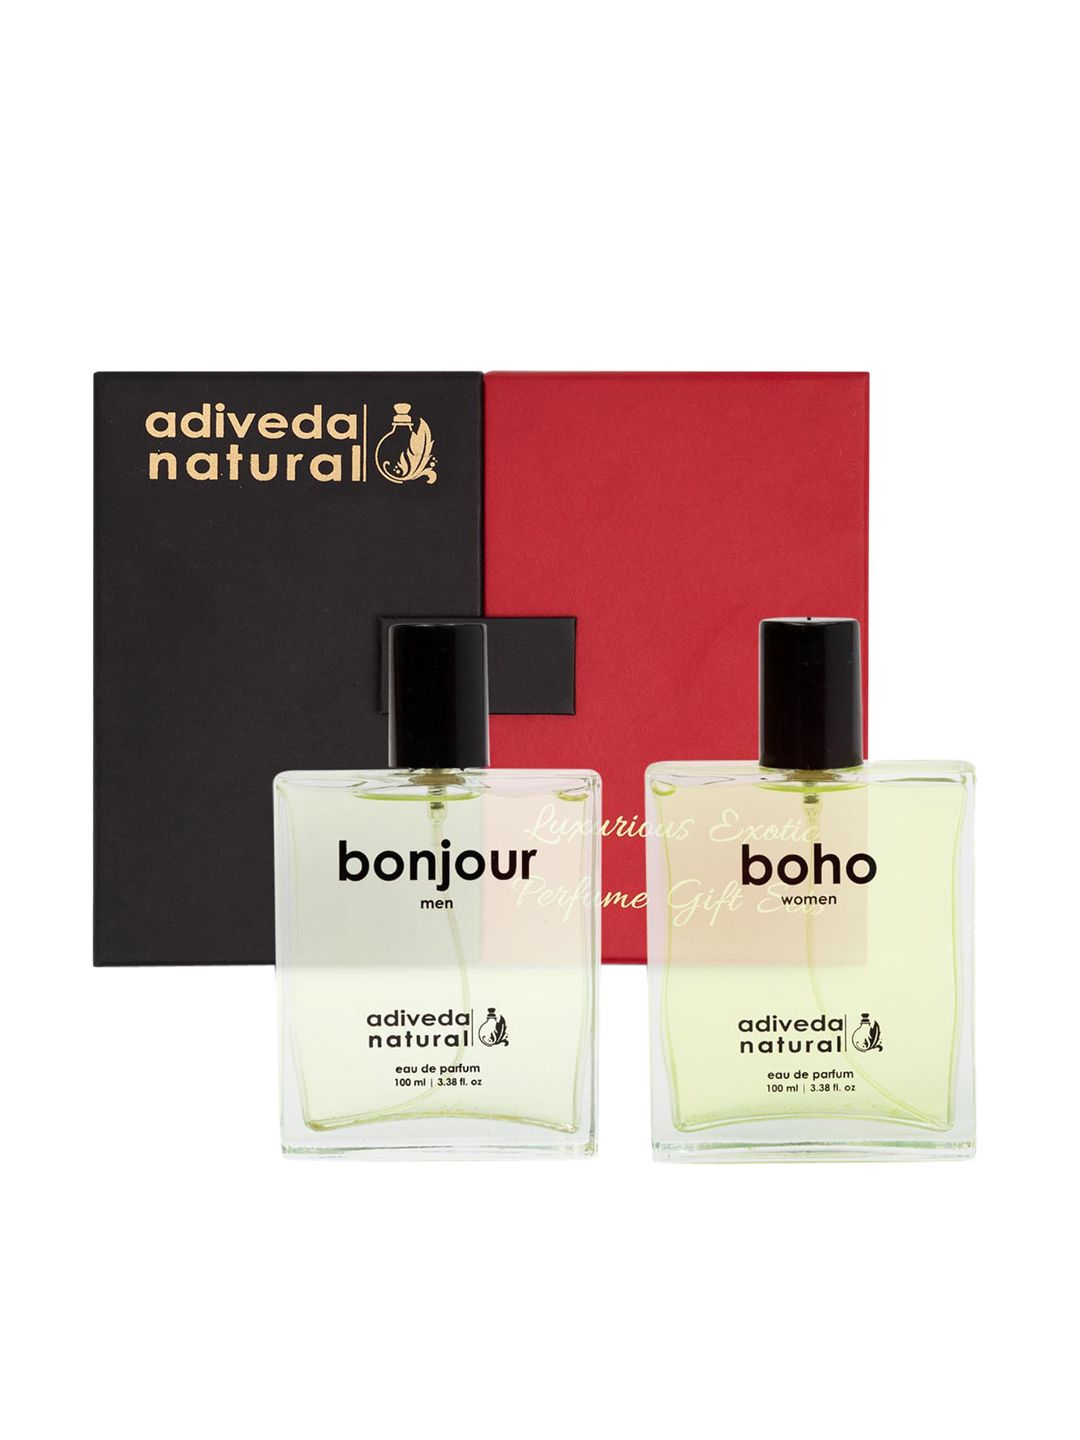 Adiveda Natural Pack of 2 Bonjour & Boho Perfume - 100ml Each Price in India